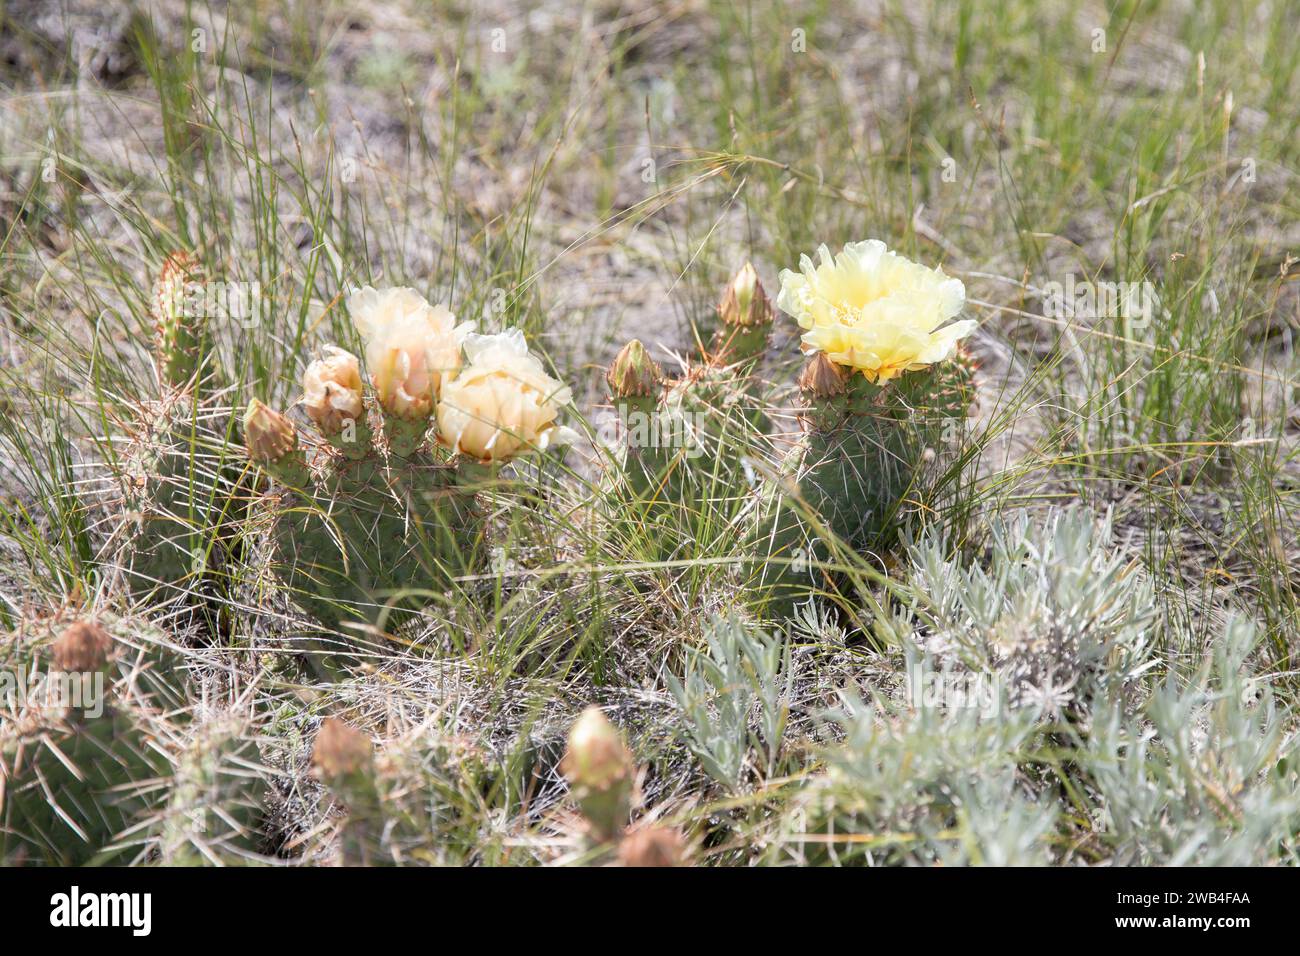 little prickly pear cactus, native grassland shrub, Alberta badlands, Canada Stock Photo